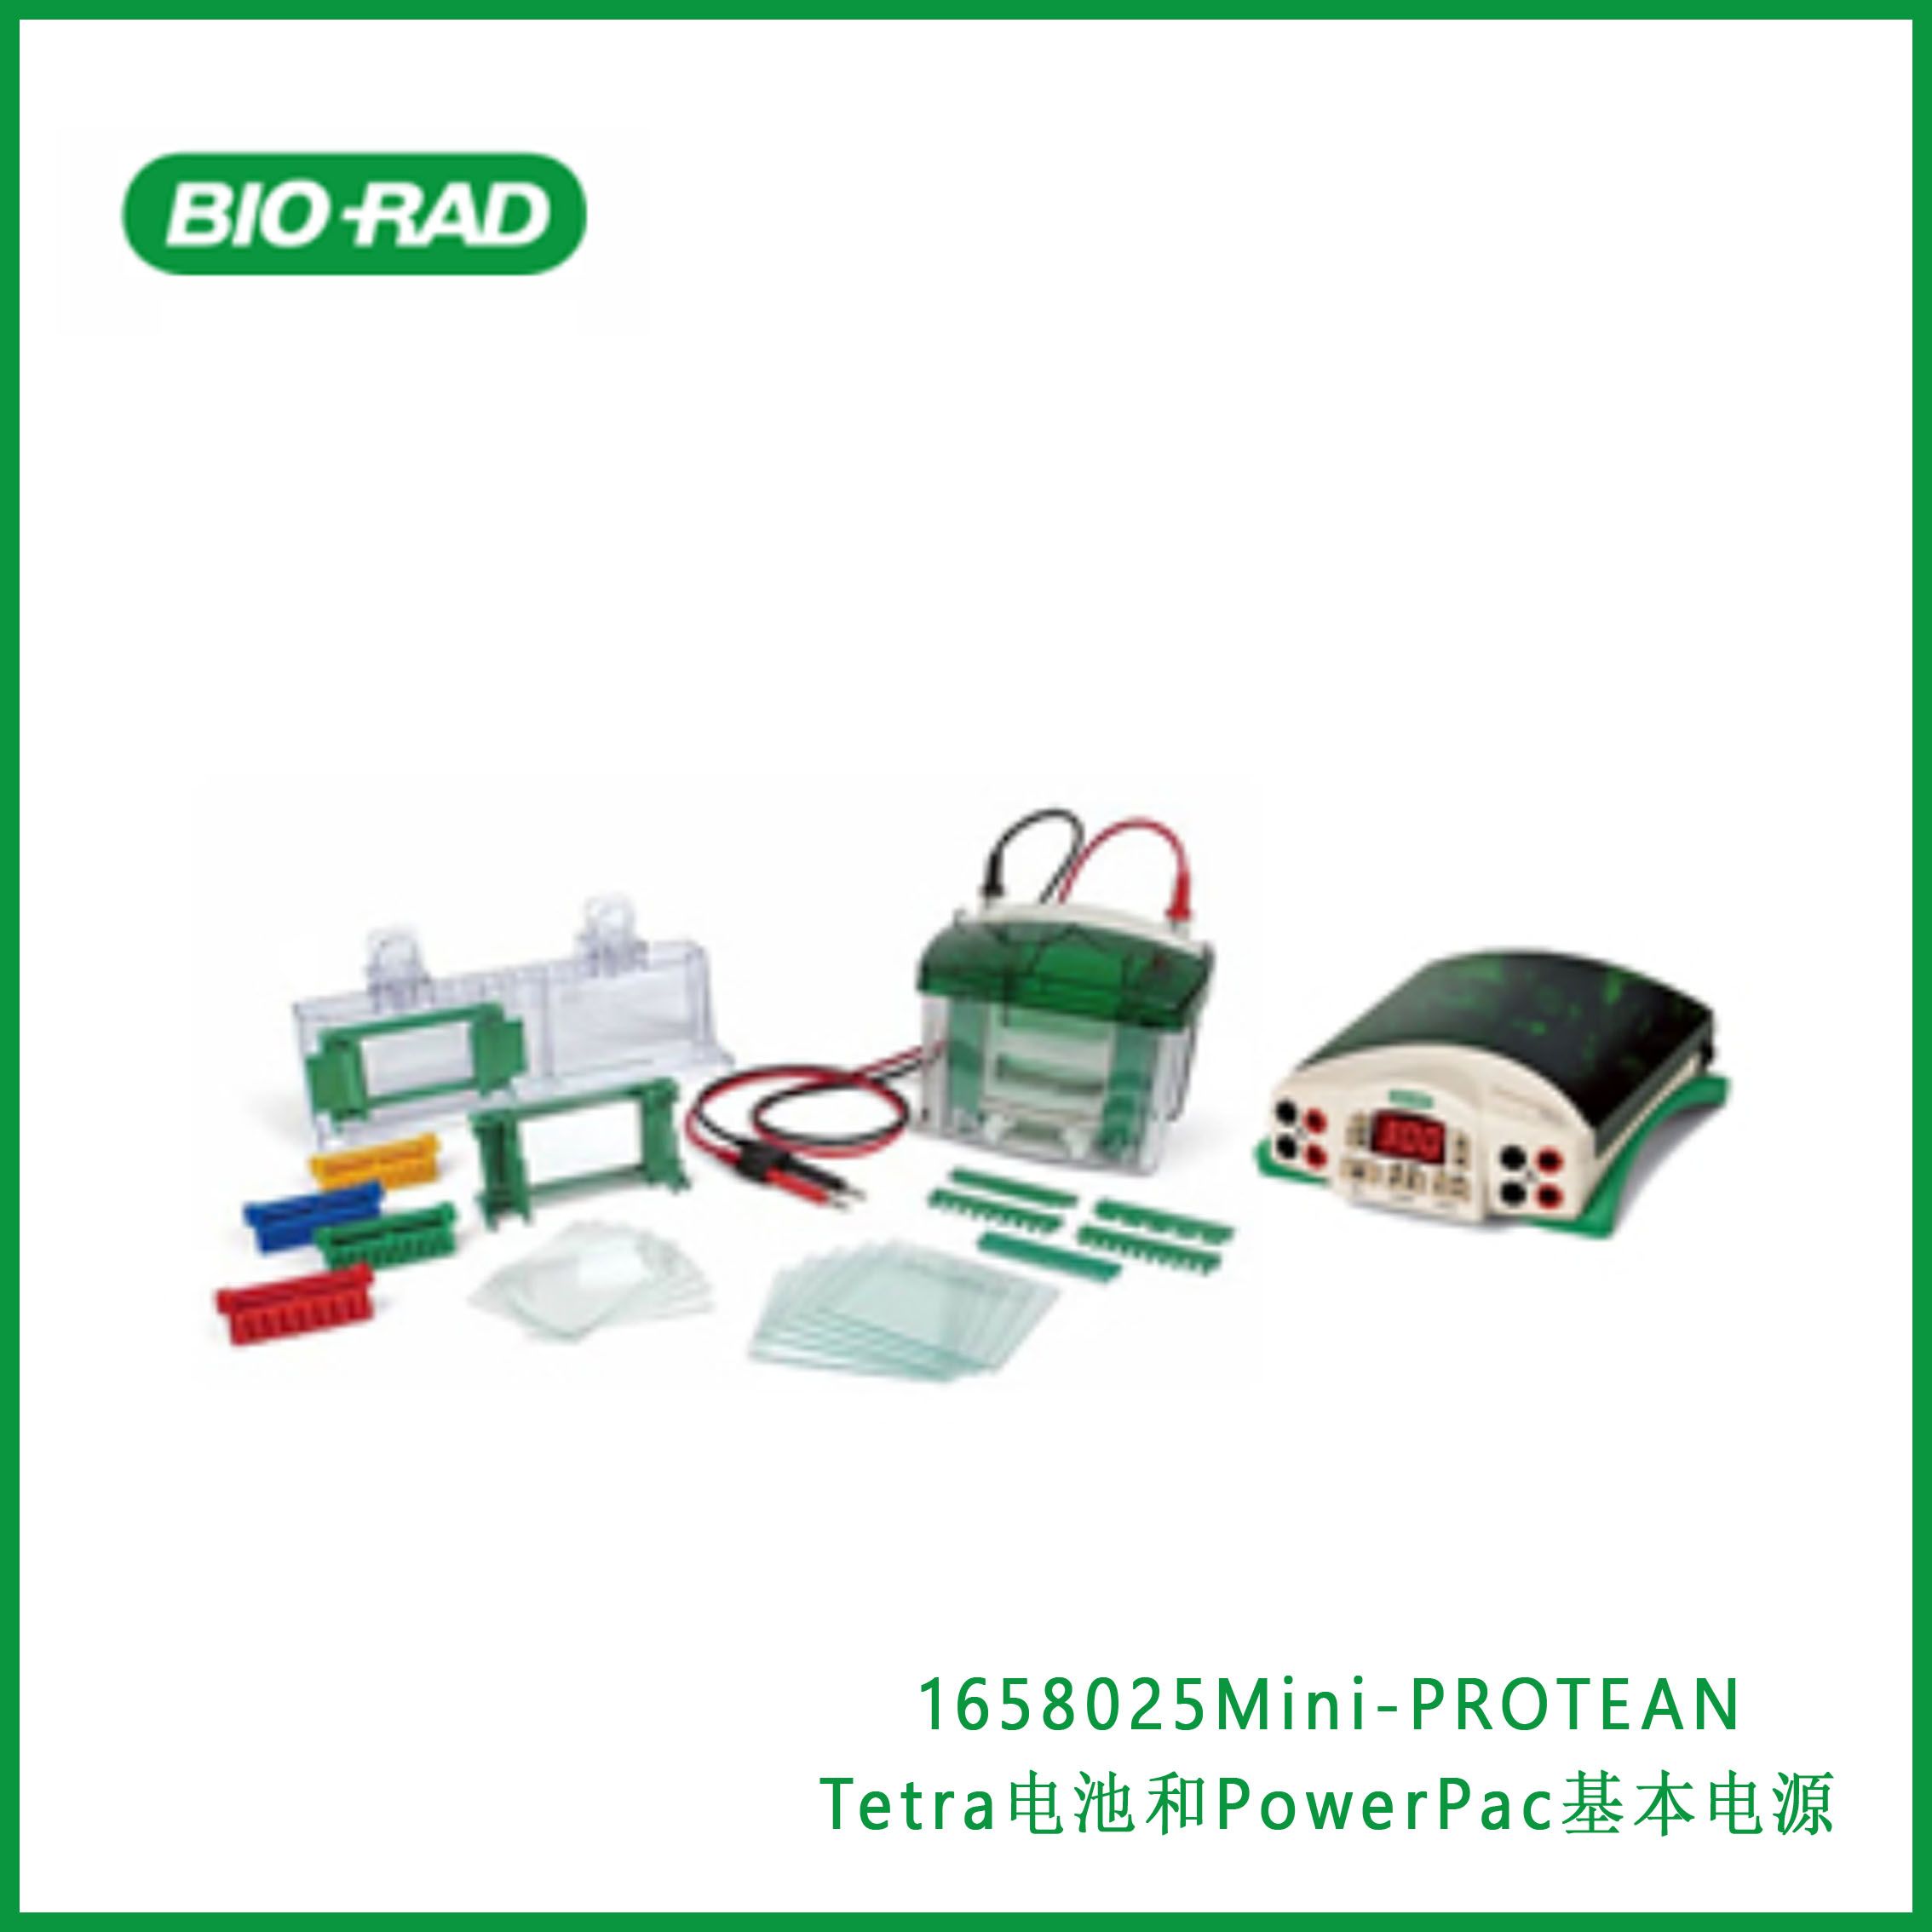 伯乐Bio-Rad1658025 Mini-PROTEAN Tetra Cell and PowerPac Basic Power Supply, includes #165-8001 and #164 -5050， Mini-PROTEAN Tetra电池和PowerPac基本电源,现货